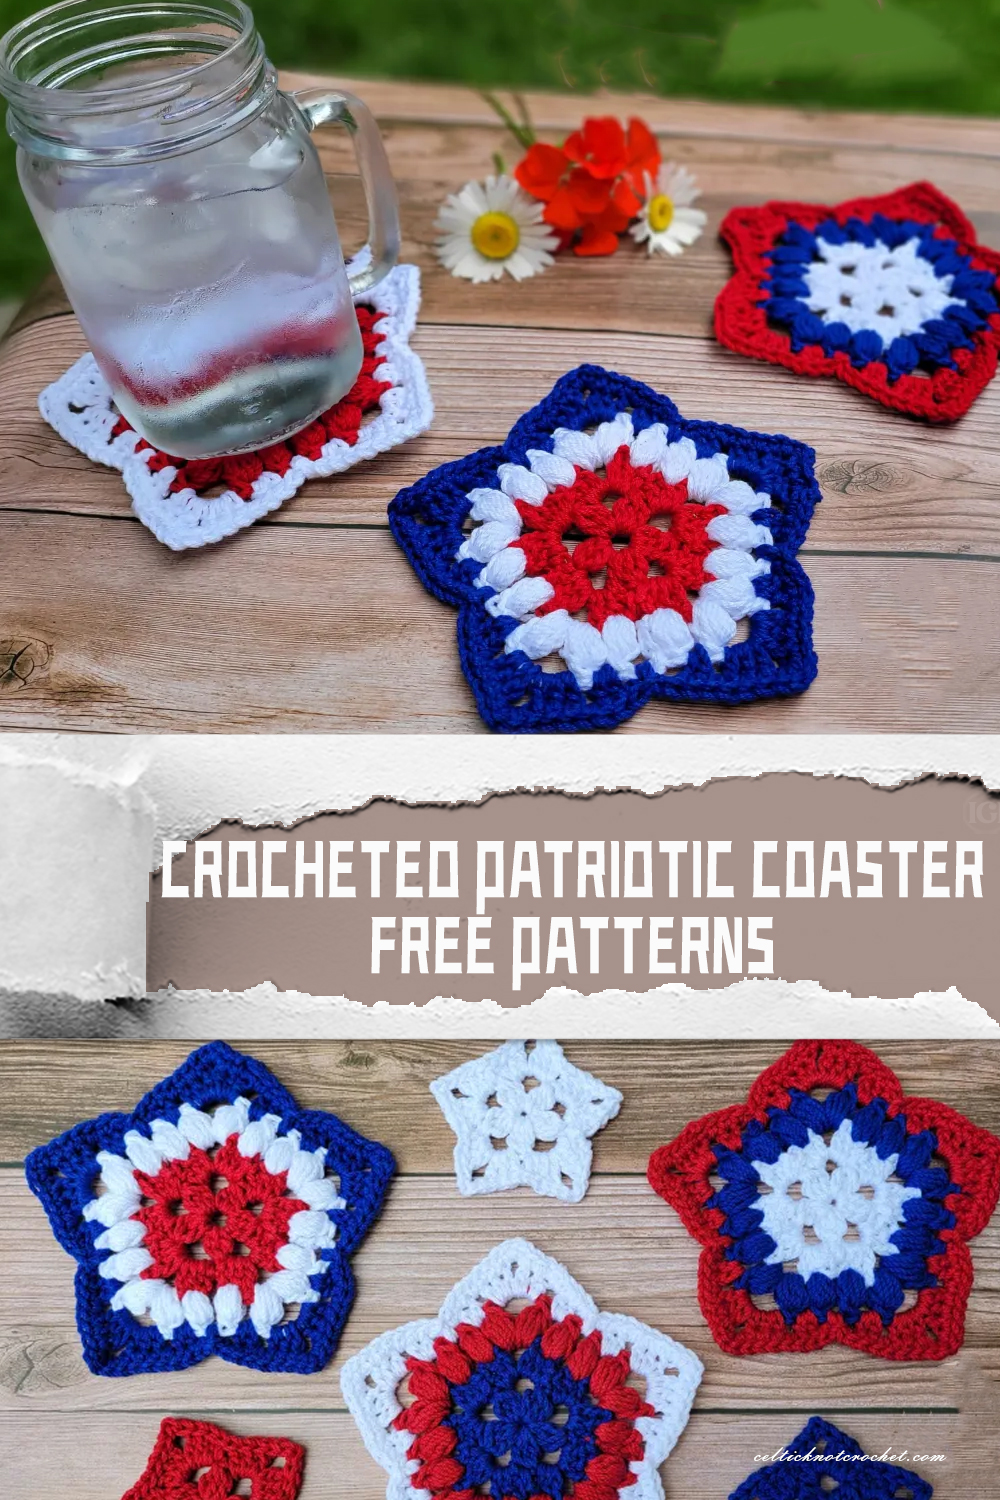 Crocheted Patriotic Coaster FREE PATTERNS